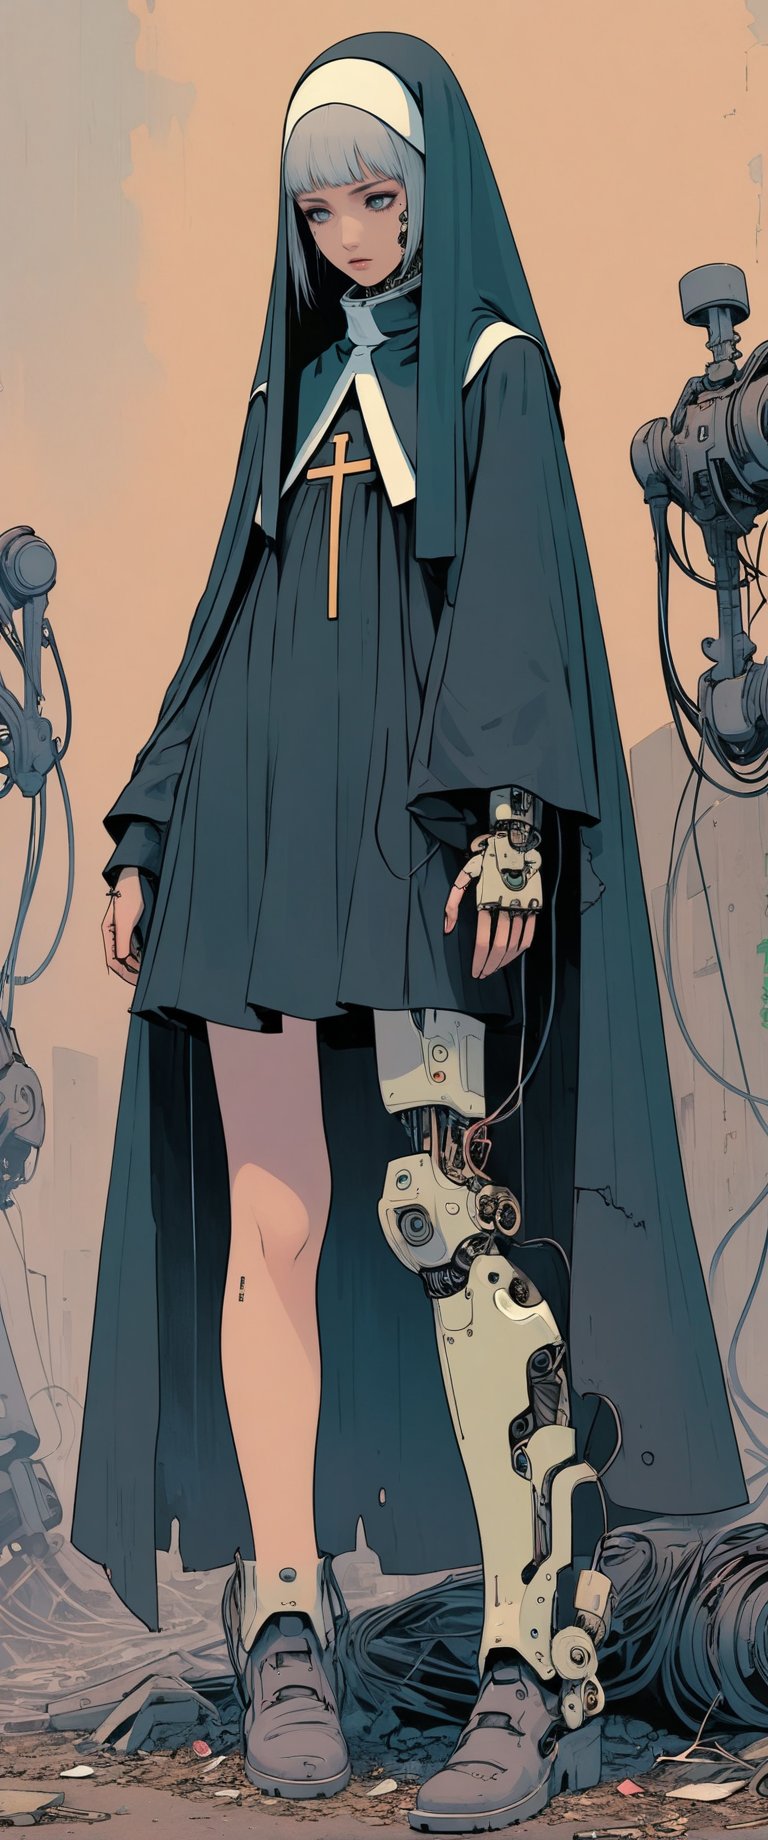 1 girl, cyborg nun , android, knelling, desesperate, sad, garbage, scrapy yard, parts,mechanical joints,ani_booster,digital artwork by Beksinski,more detail XL,anime,Dark Manga of